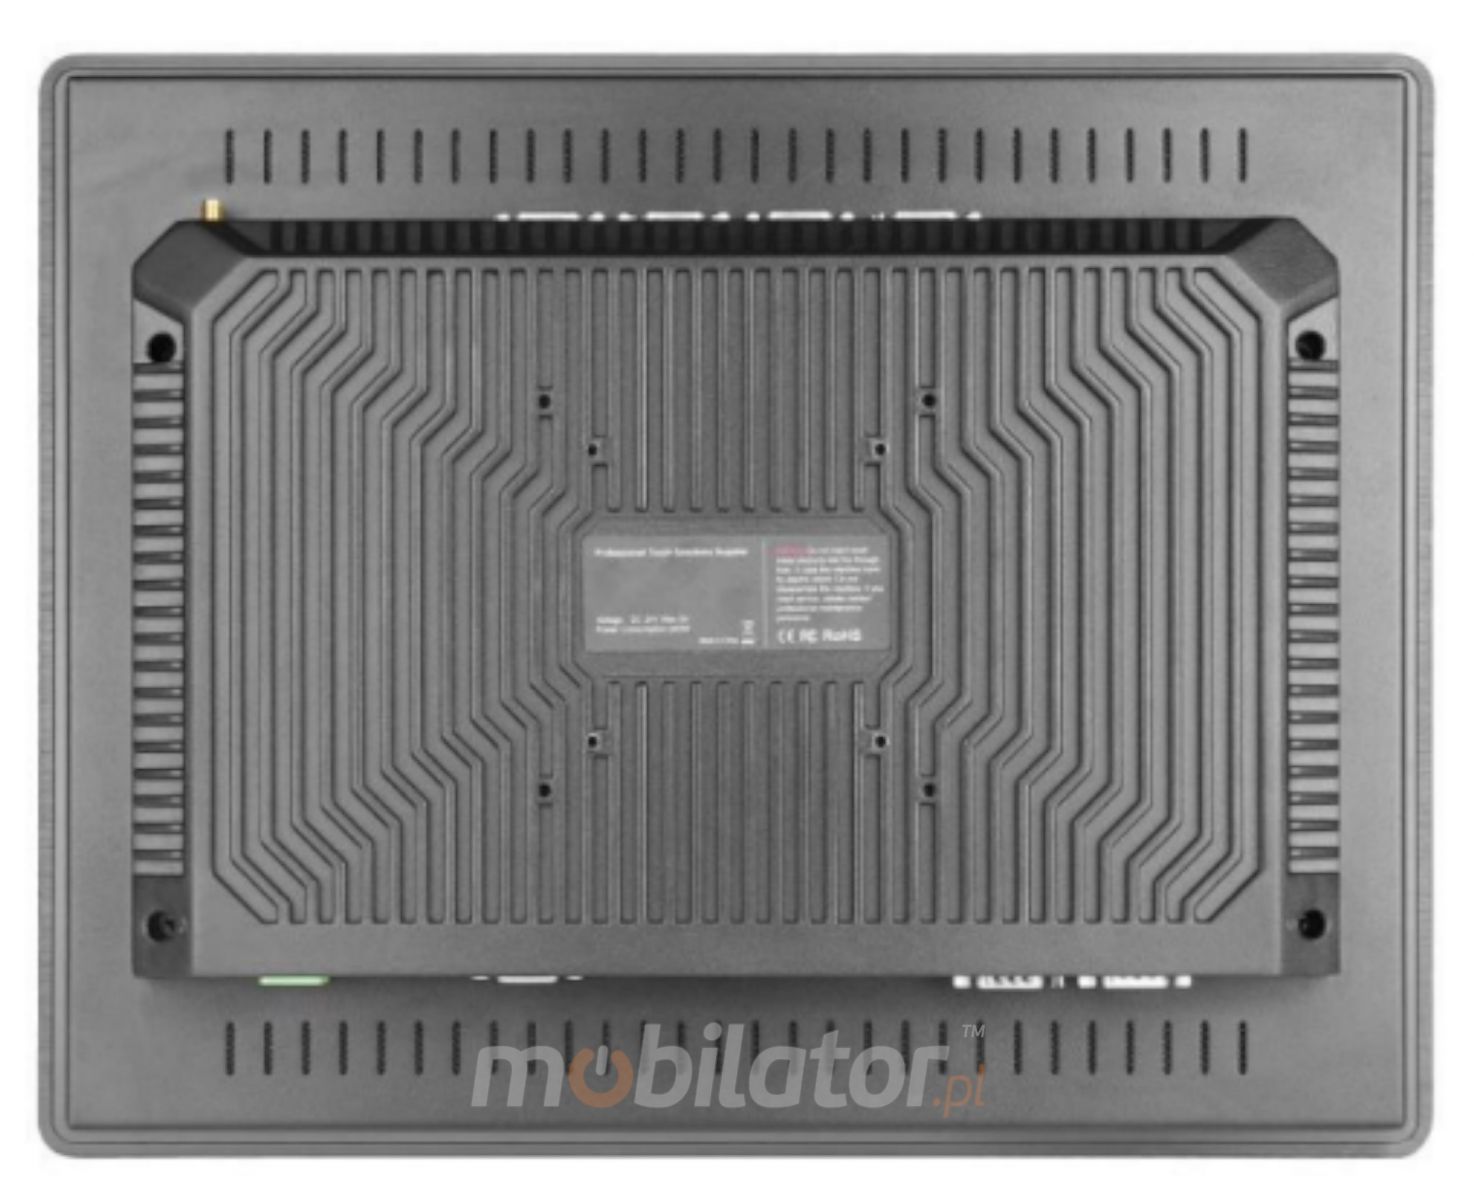 Panel BiBOX-156PC2 with resistant metal housing